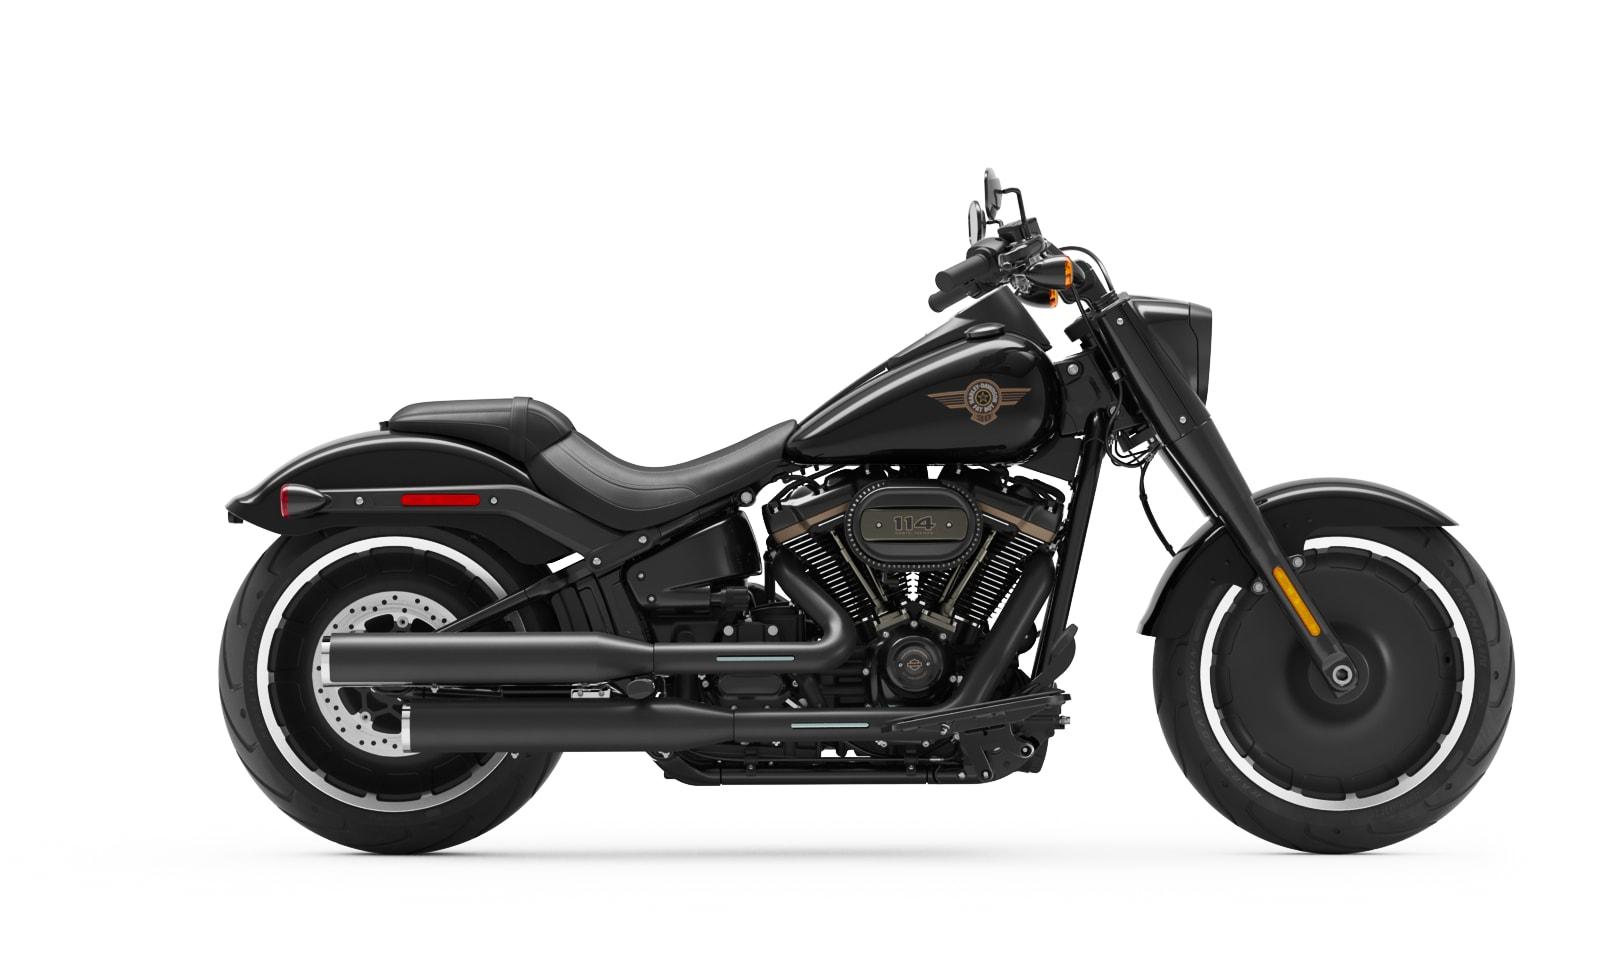 2021 Harley Davidson Fat Boy Bs6 Price Specs Mileage Top Speed